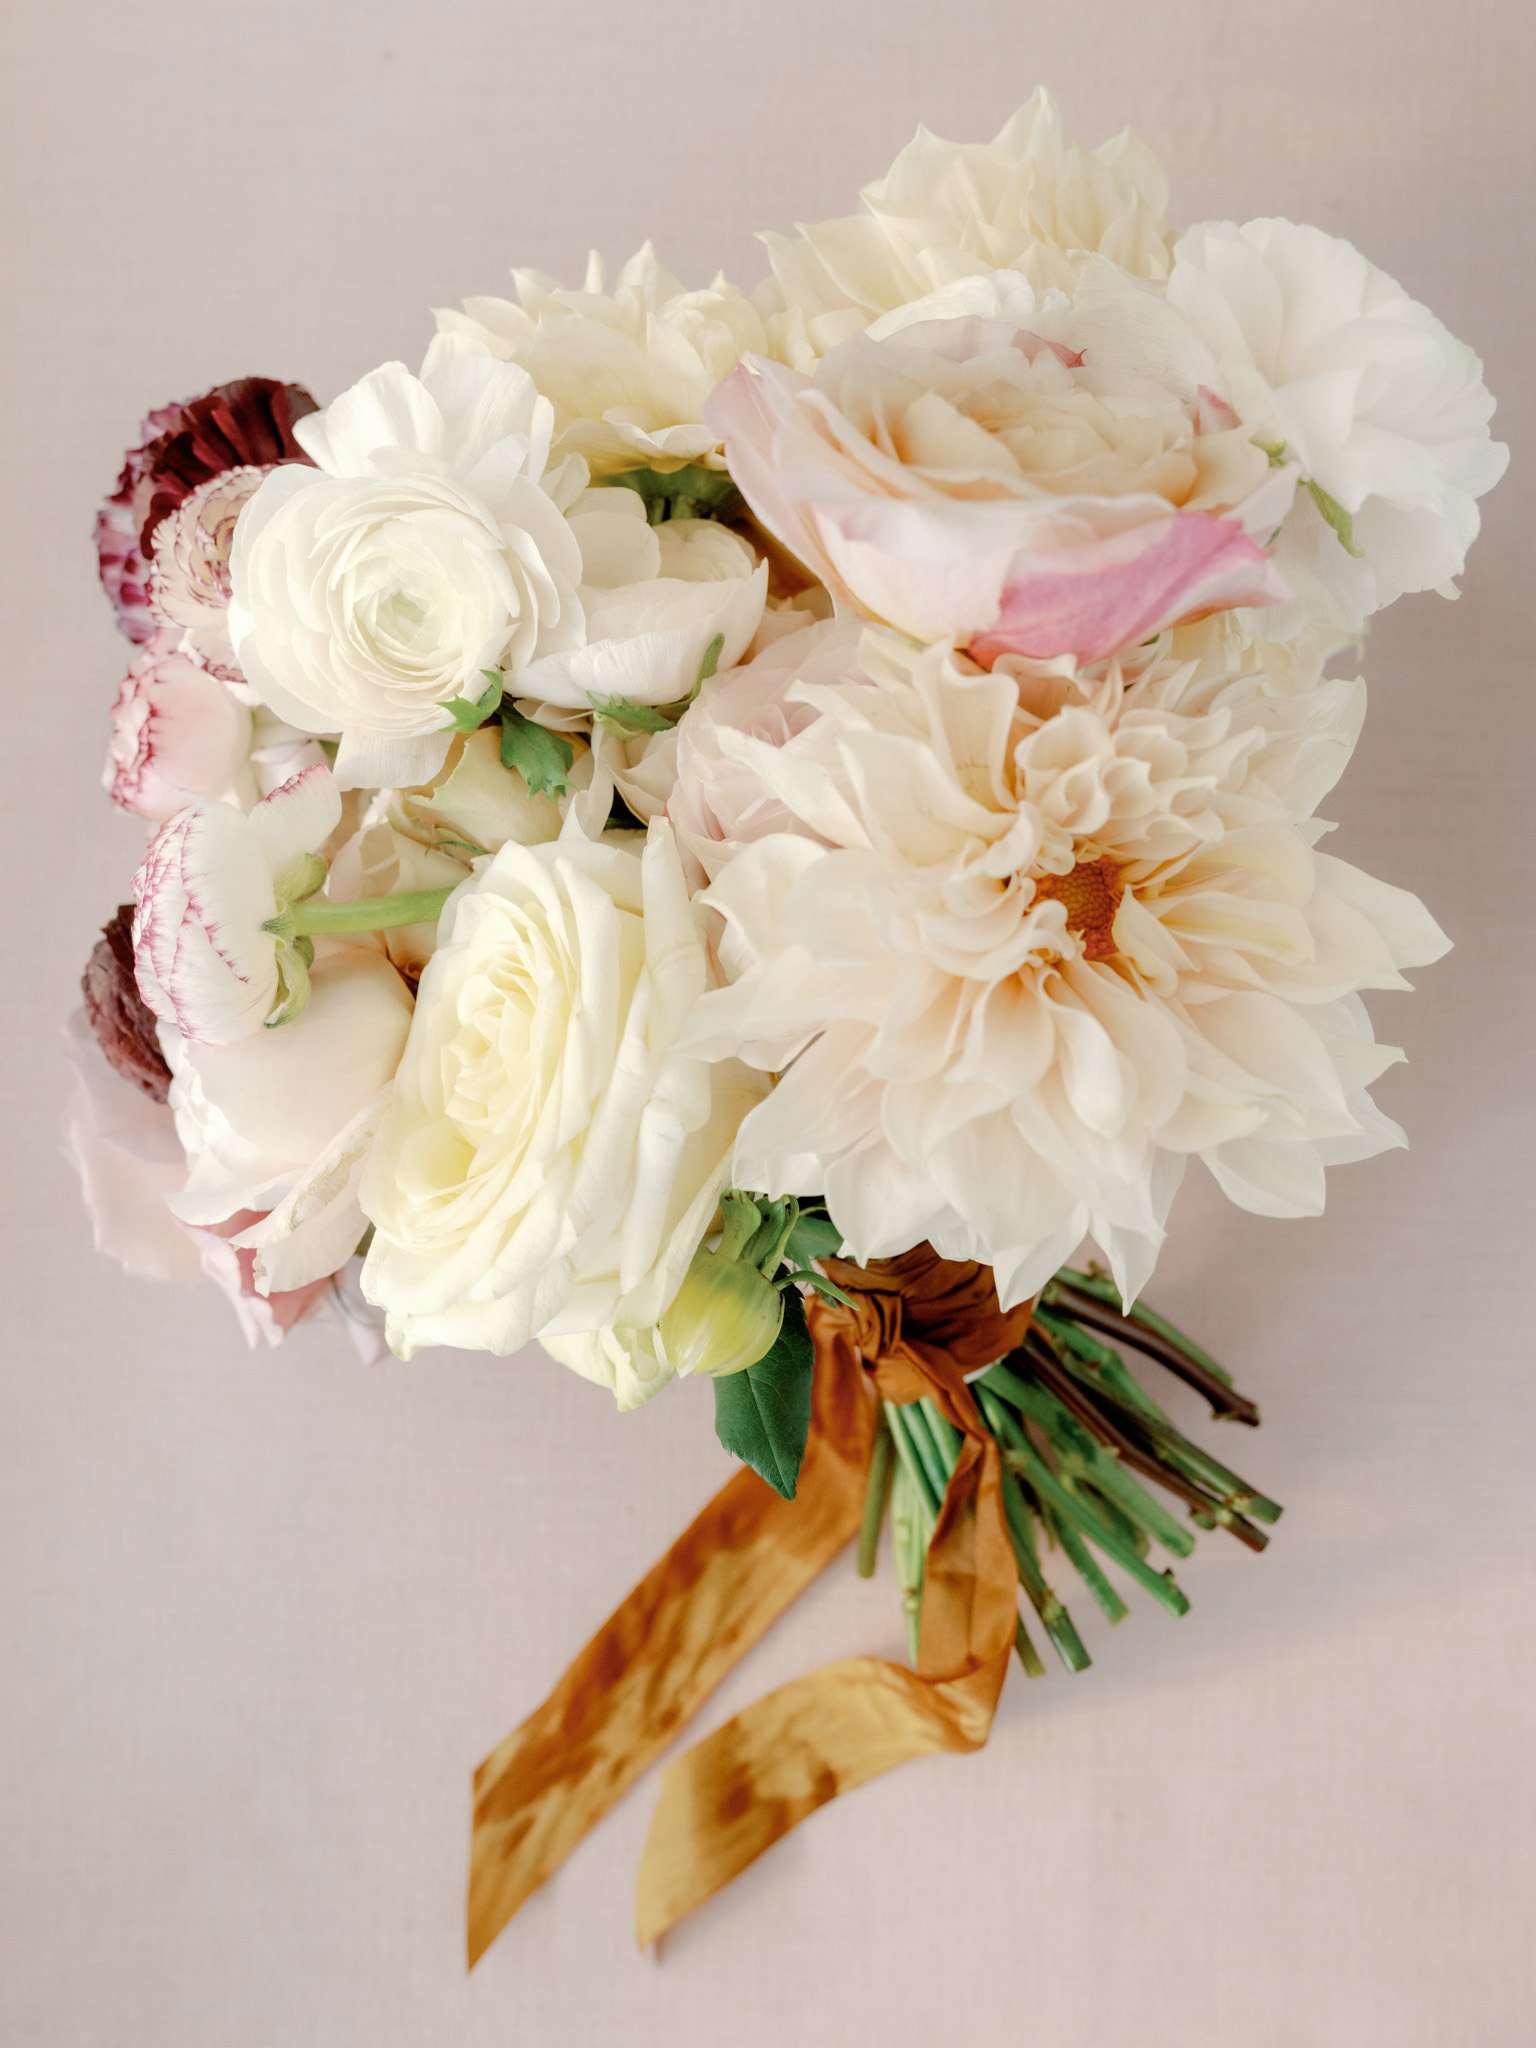 Beautiful bride's bouquet. Wedding photography add-ons image by Jenny Fu Studio